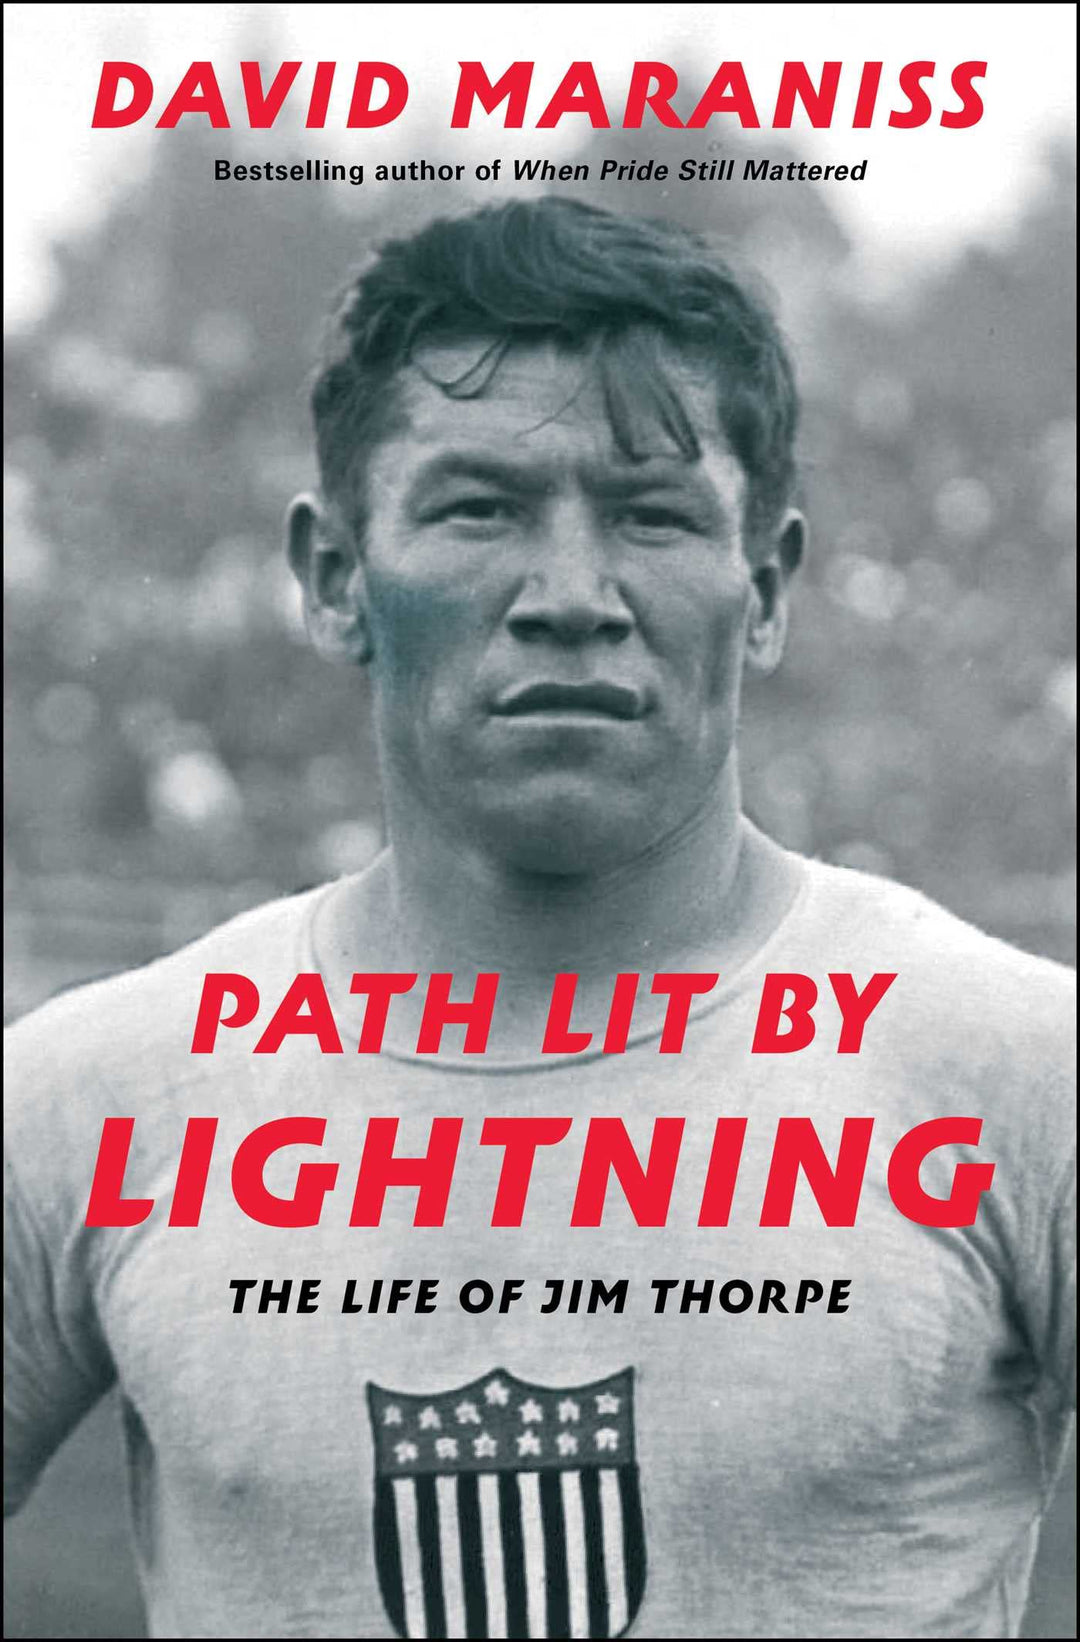 Path Lit by Lightning: The Life of Jim Thorpe by David Maraniss